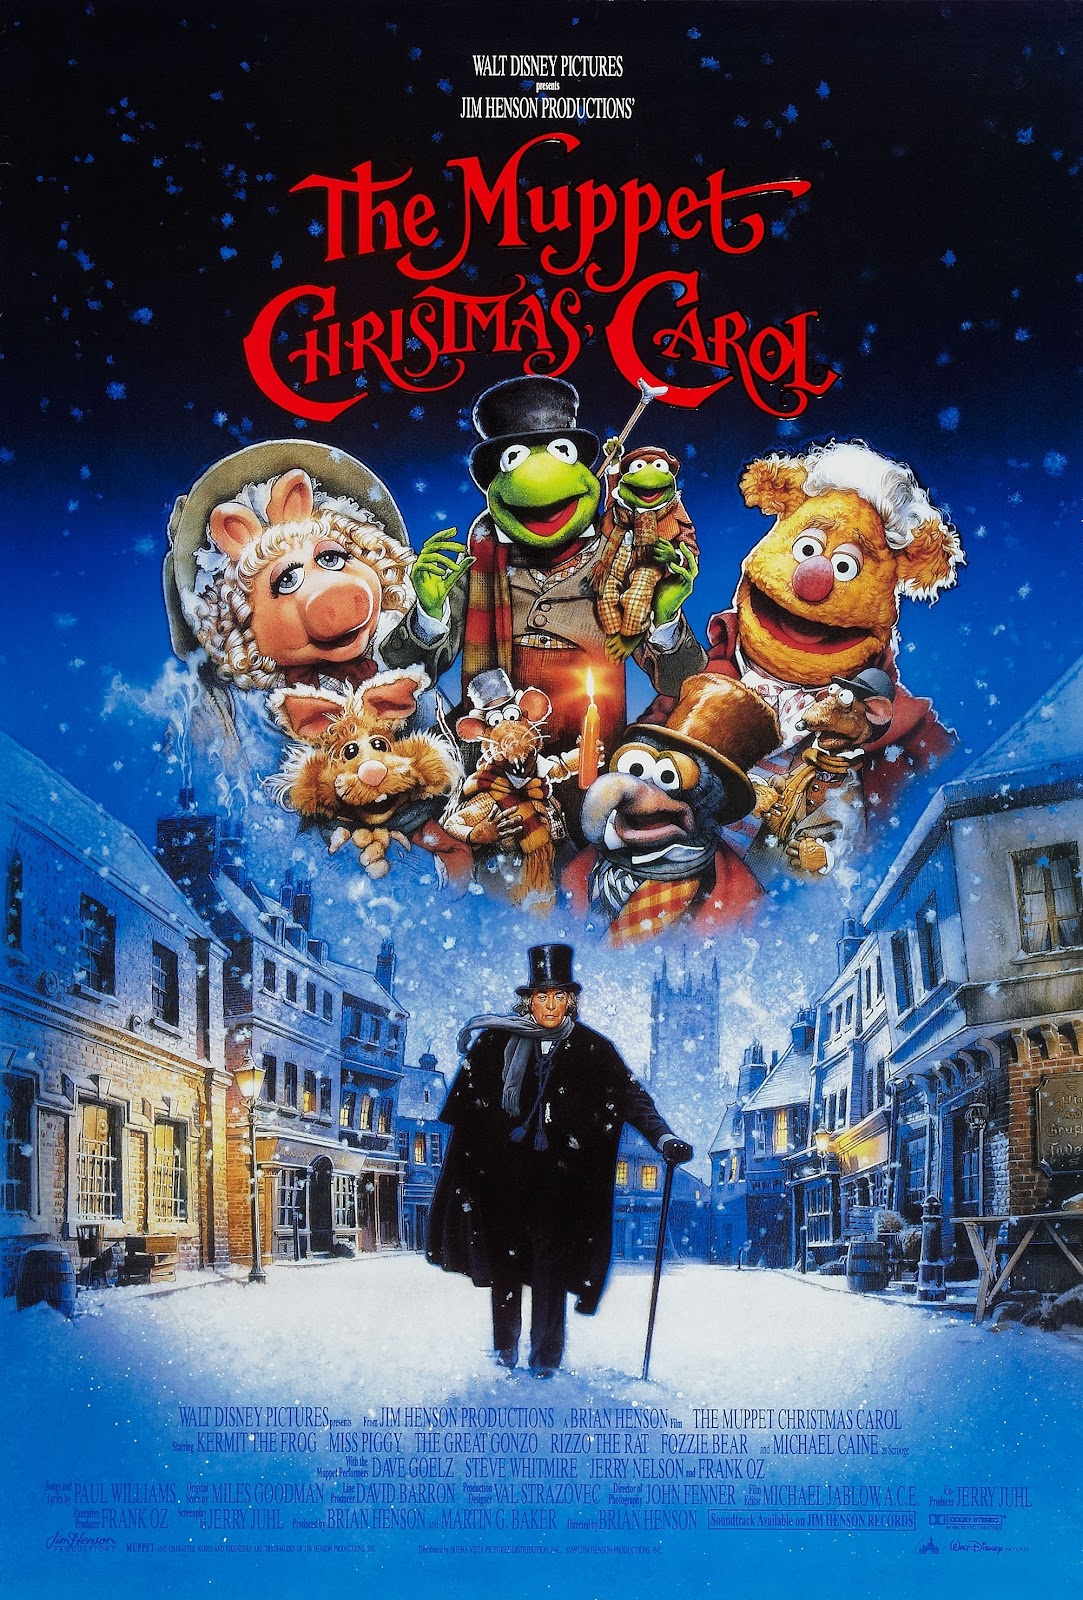 The Muppet Christmas Carol poster (From:IMDB.com).